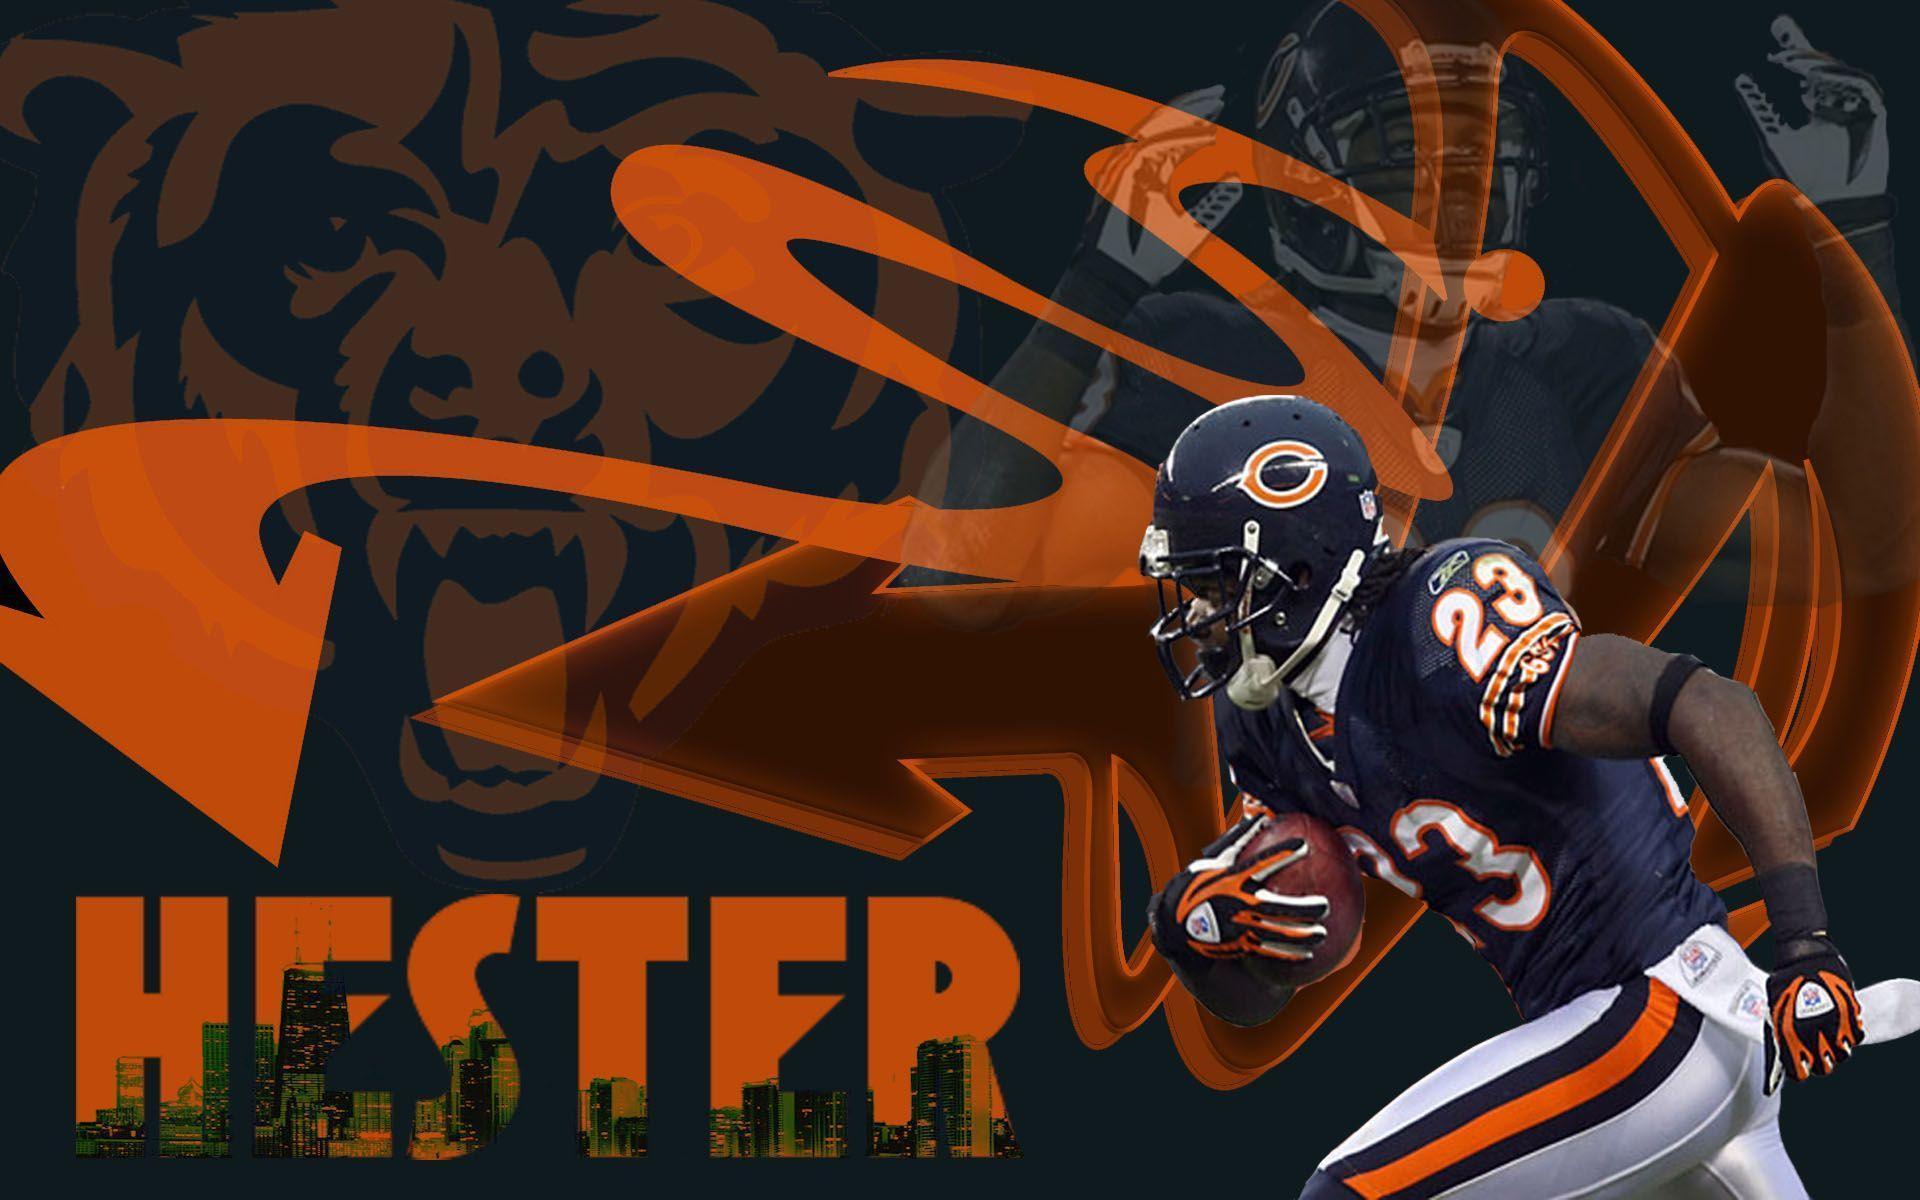 Chicago Bears Desktop Wallpaper